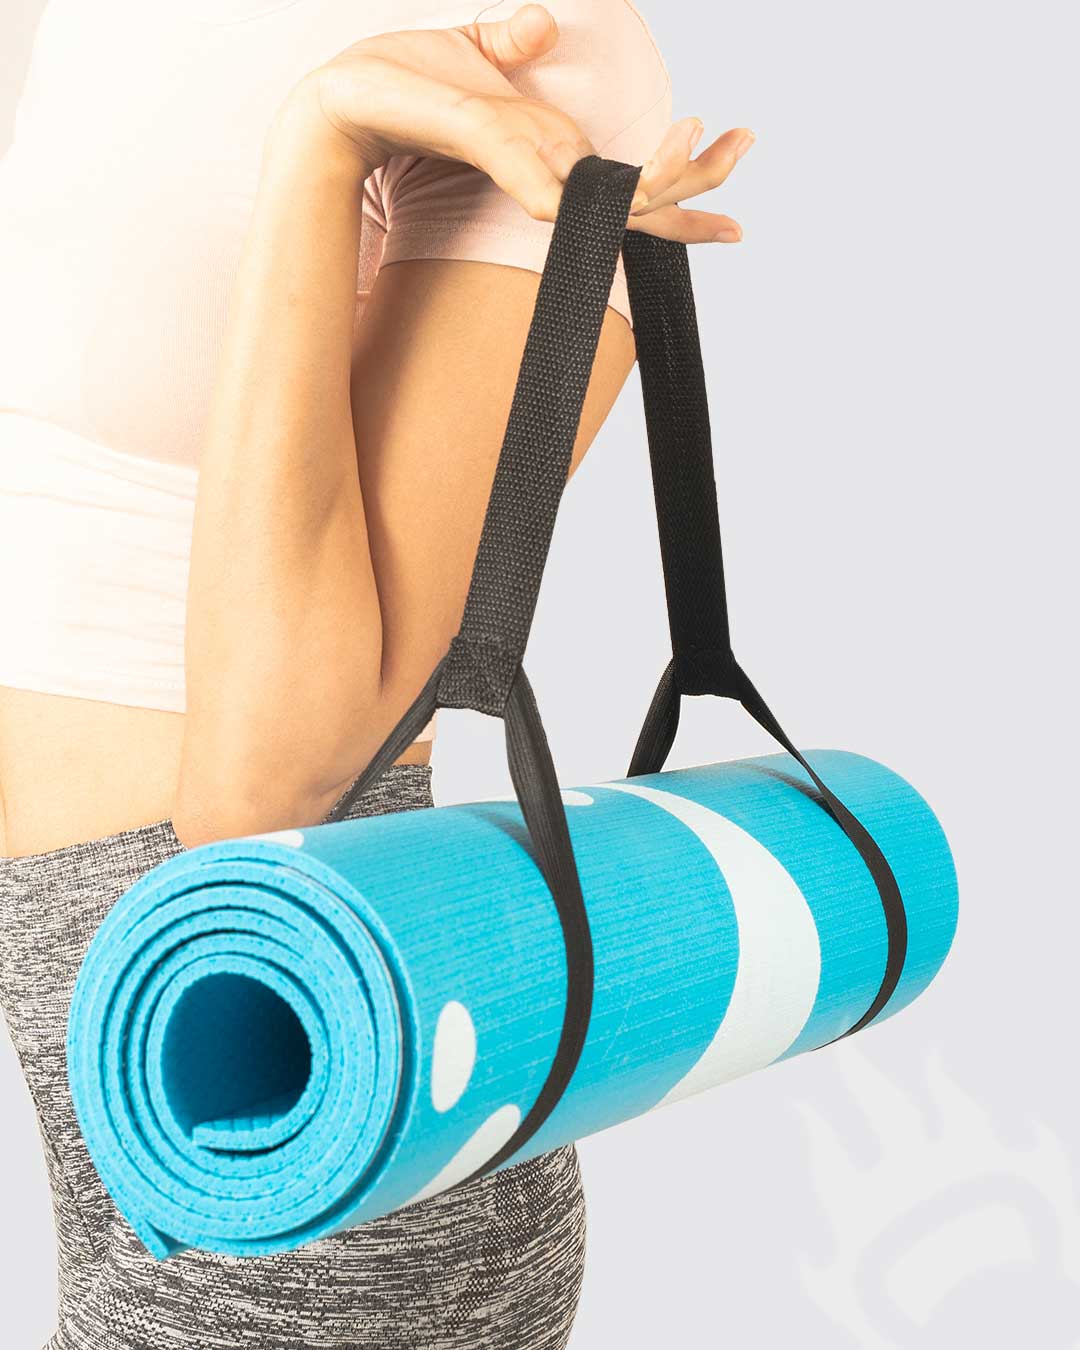 Prana Yoga Mat - Highly Dense, Tough and Anti-slip - Burnlab.Co